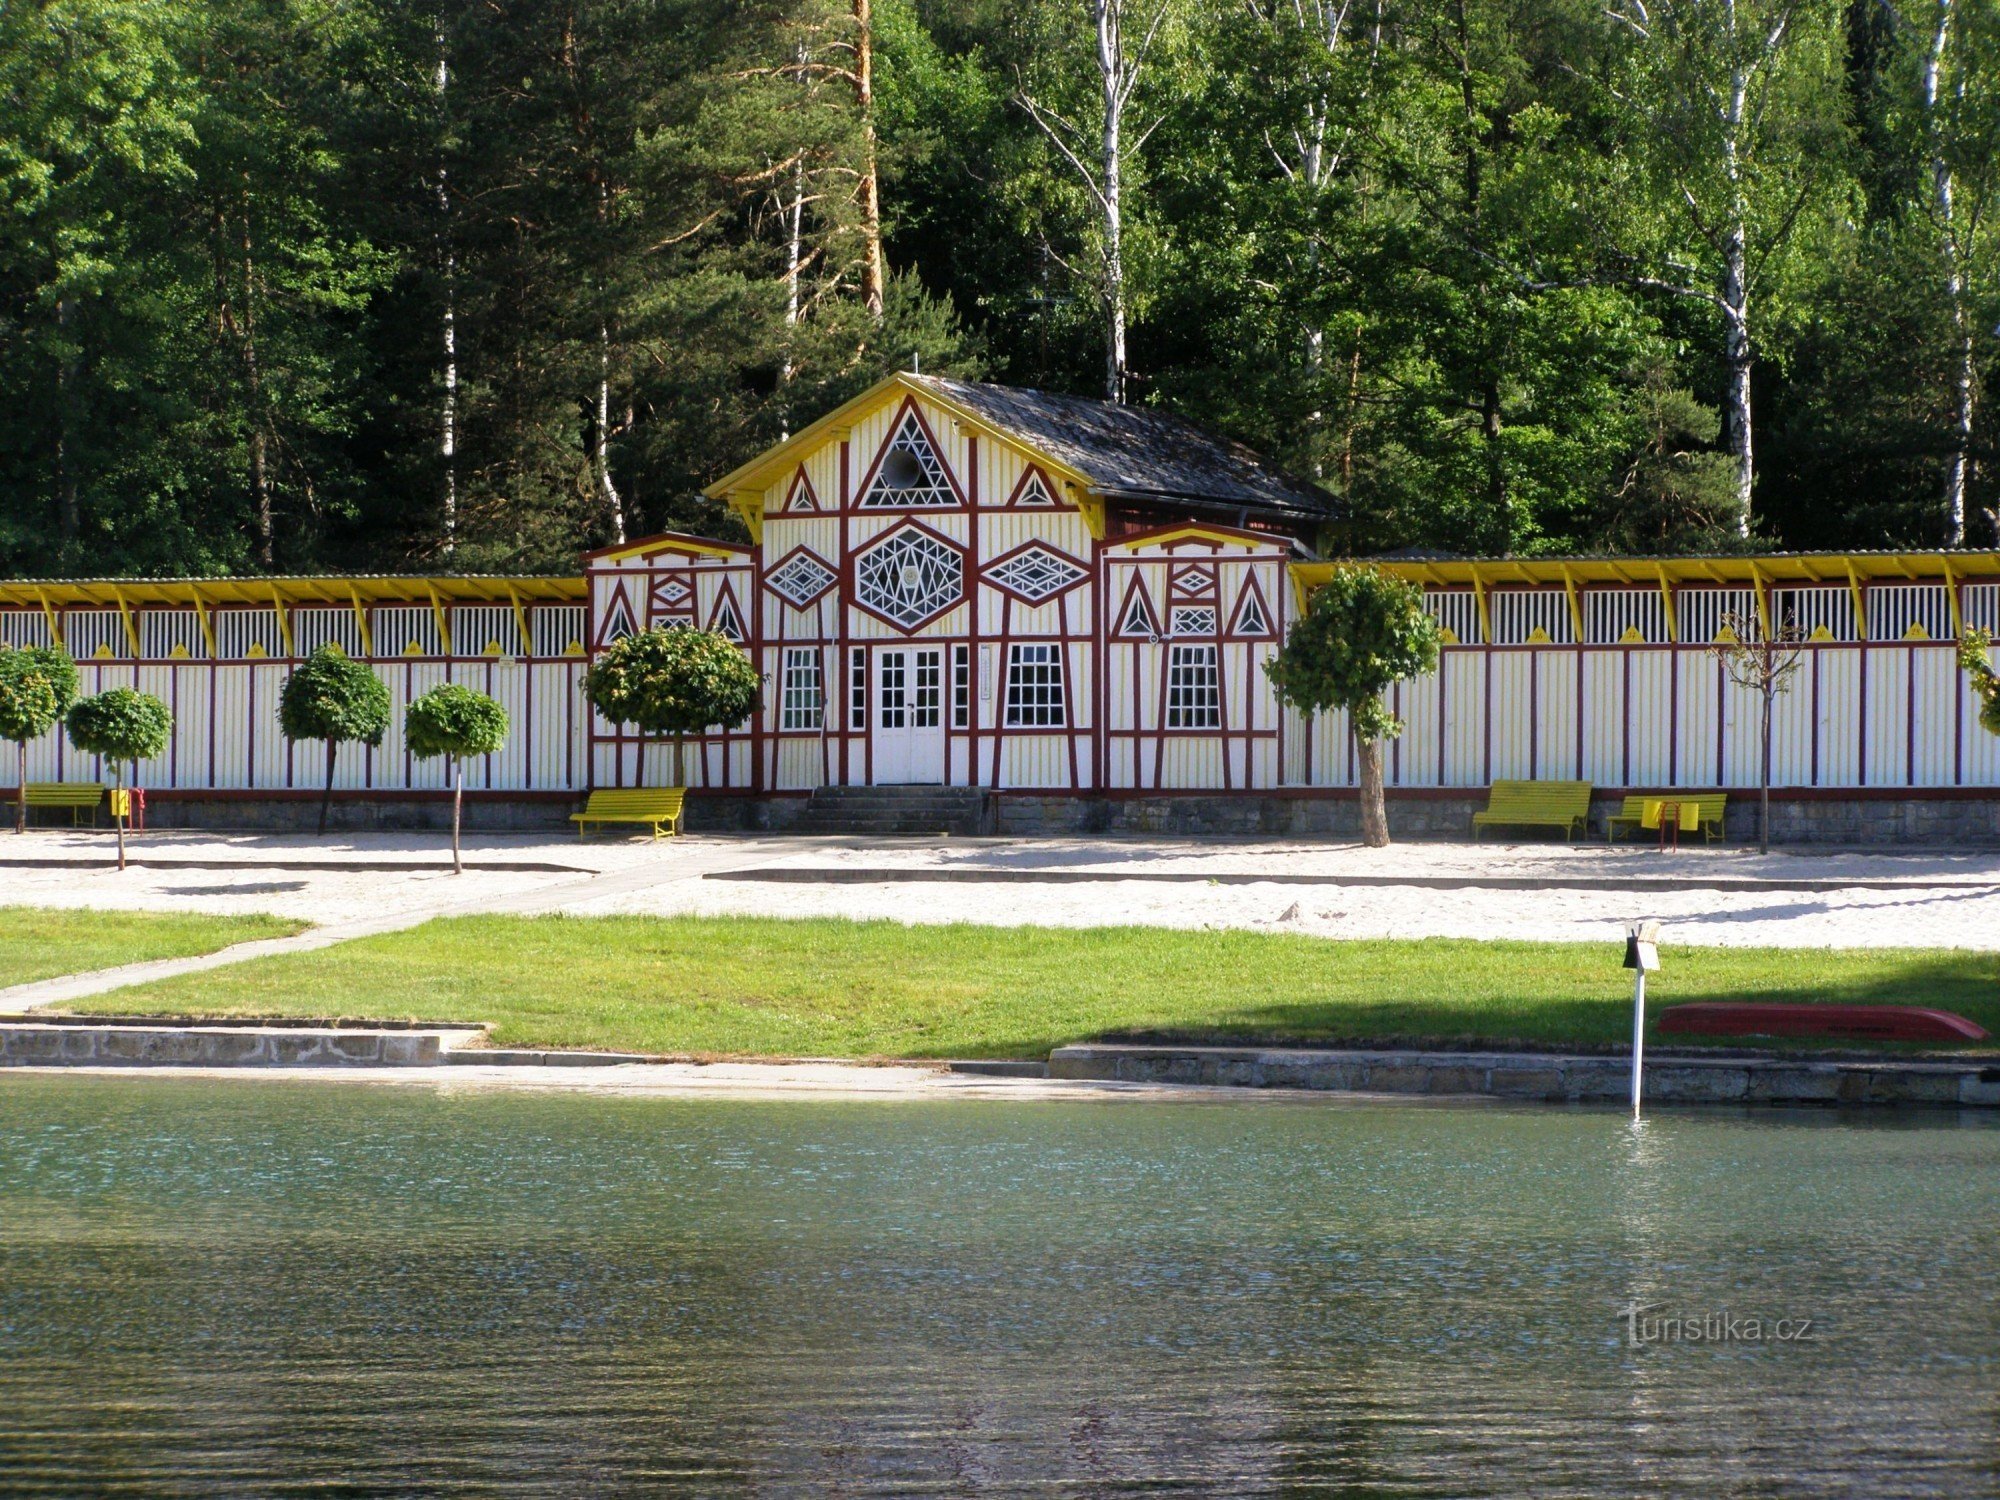 Dachova pool